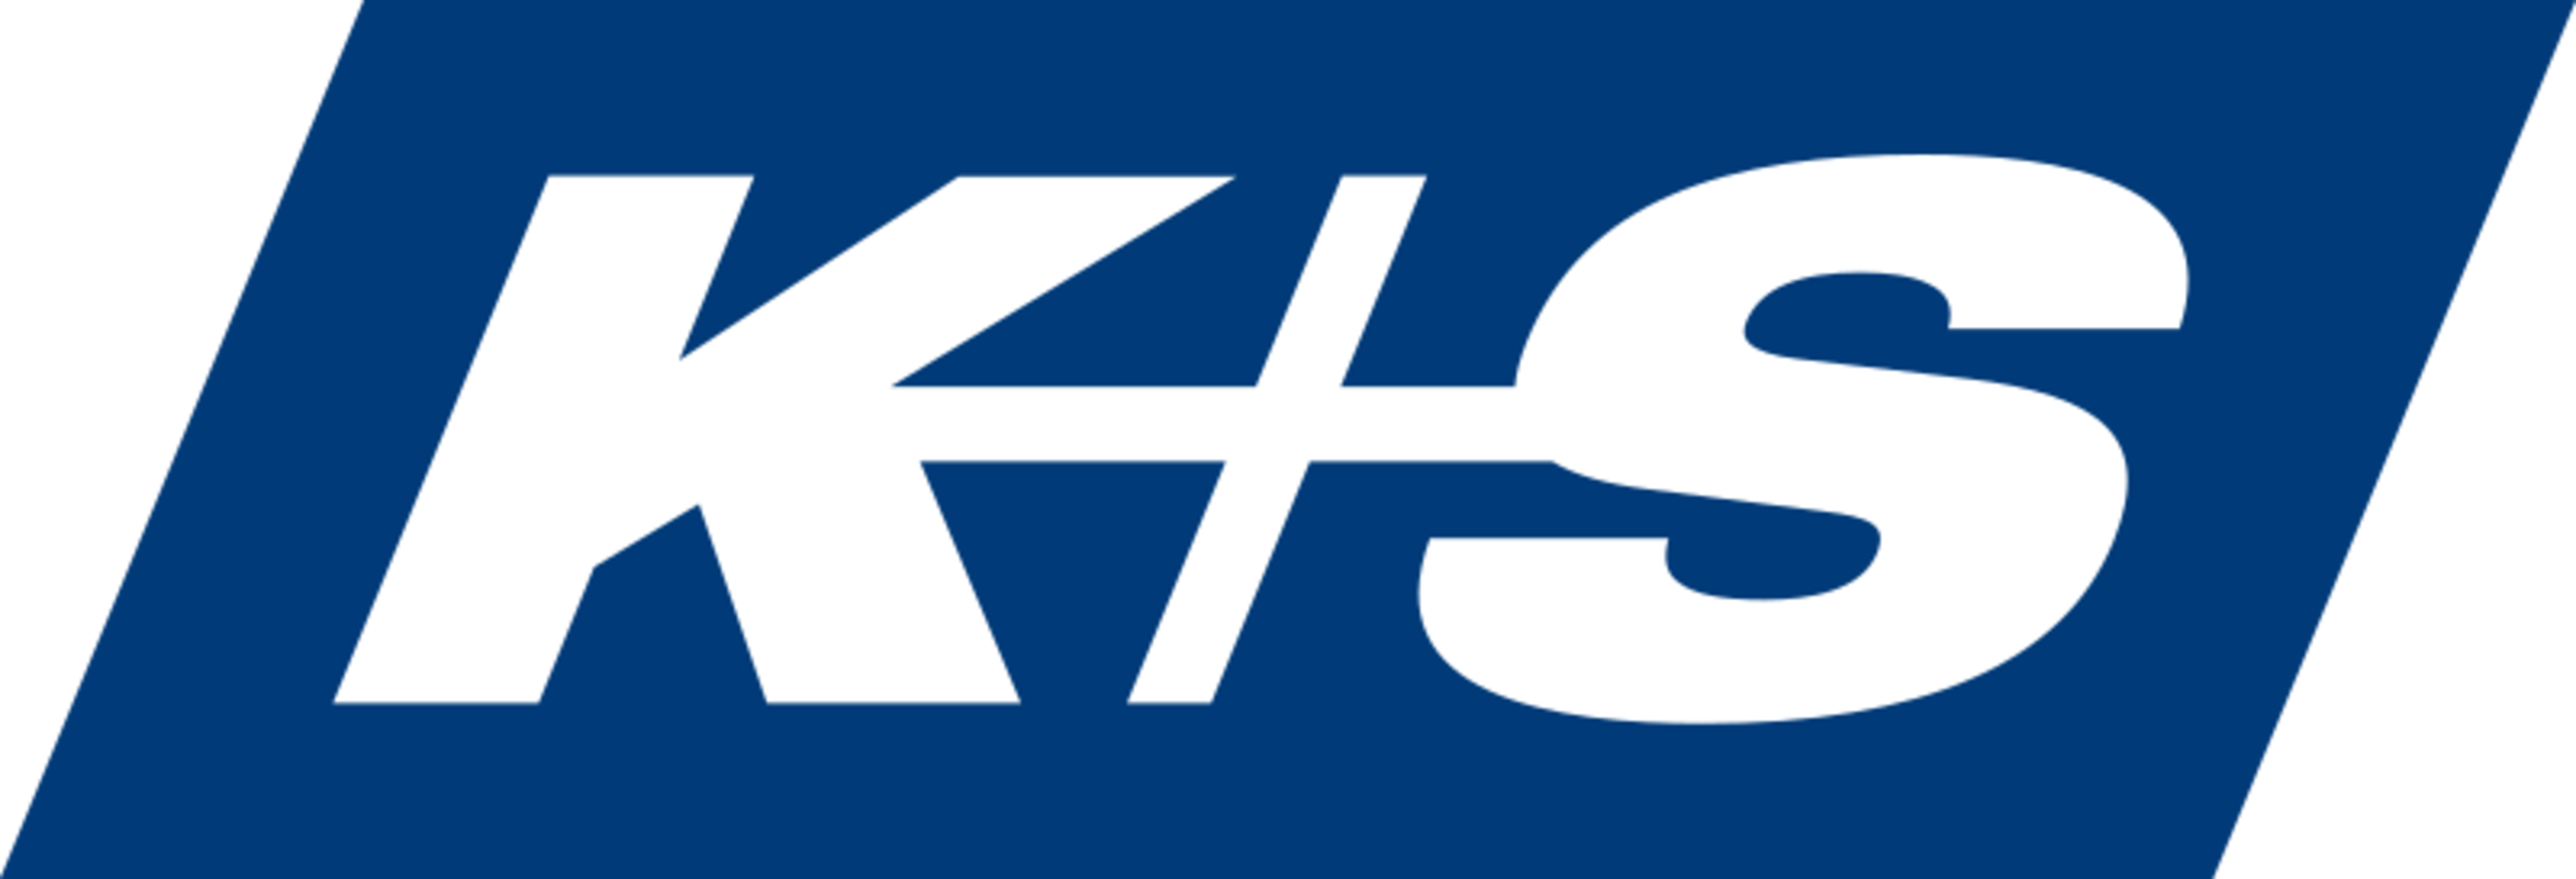 Kpluss-logo